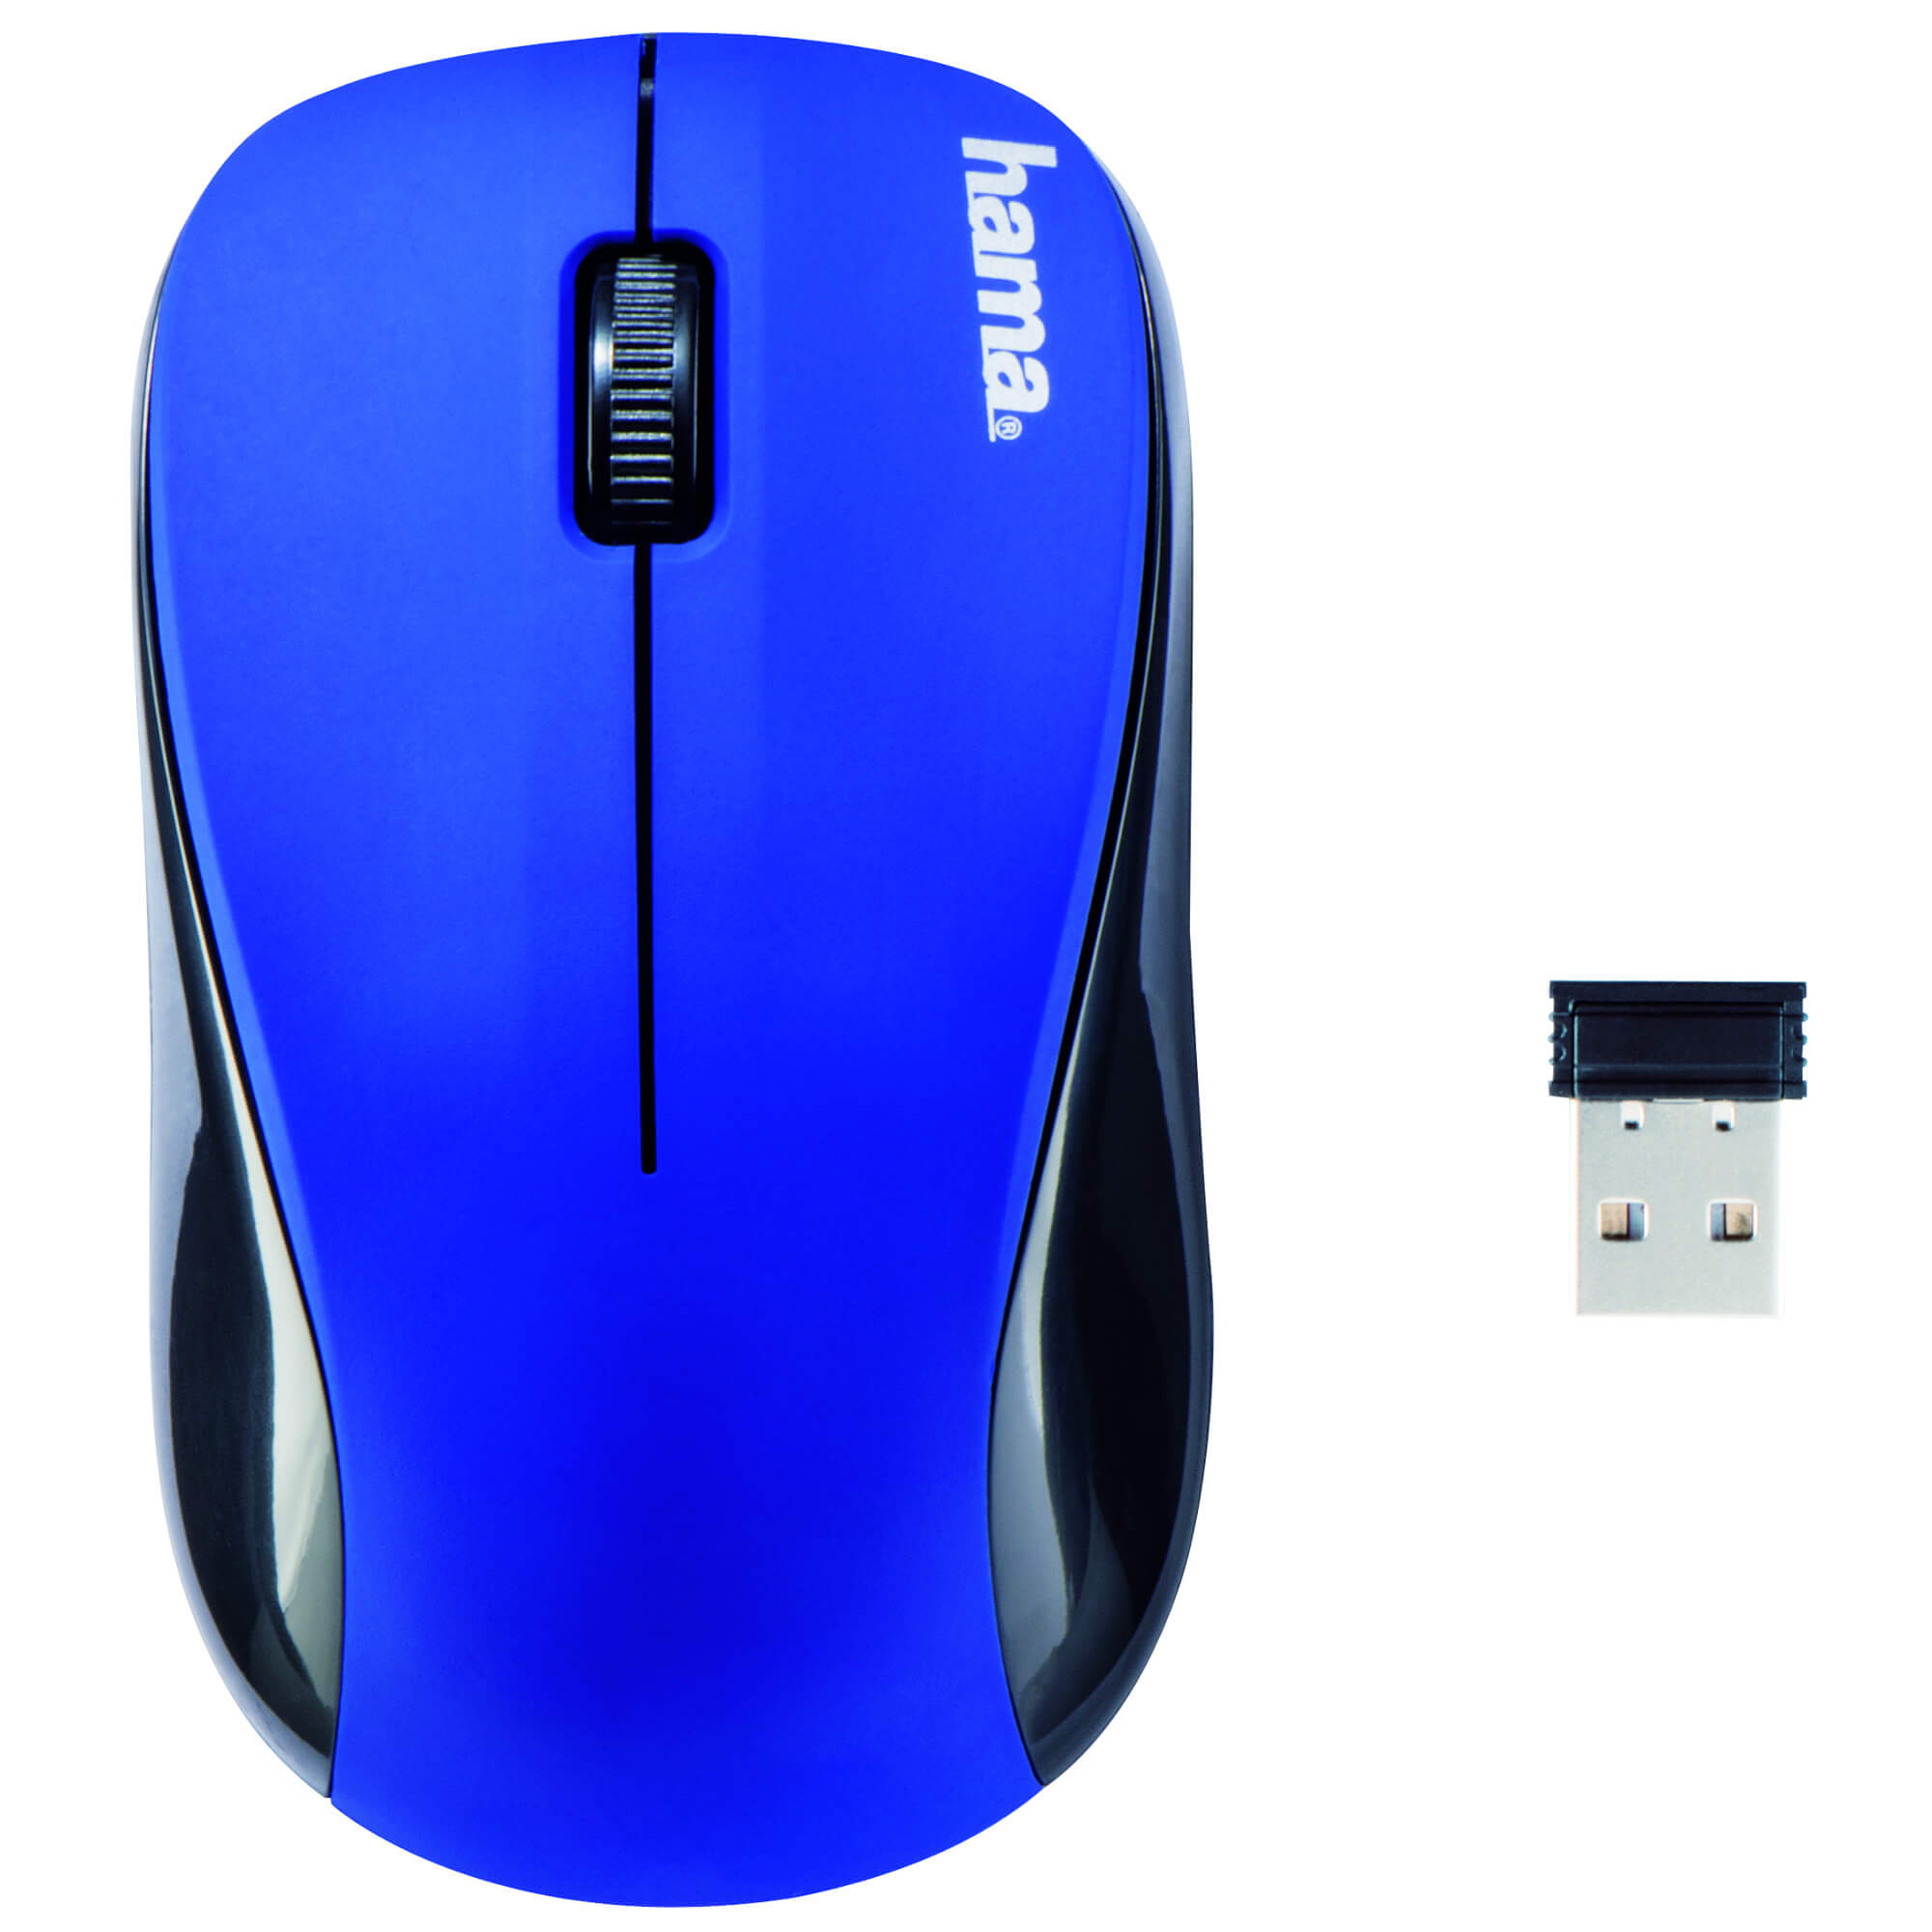  Mouse wireless Hama AM-8100 Albastru 